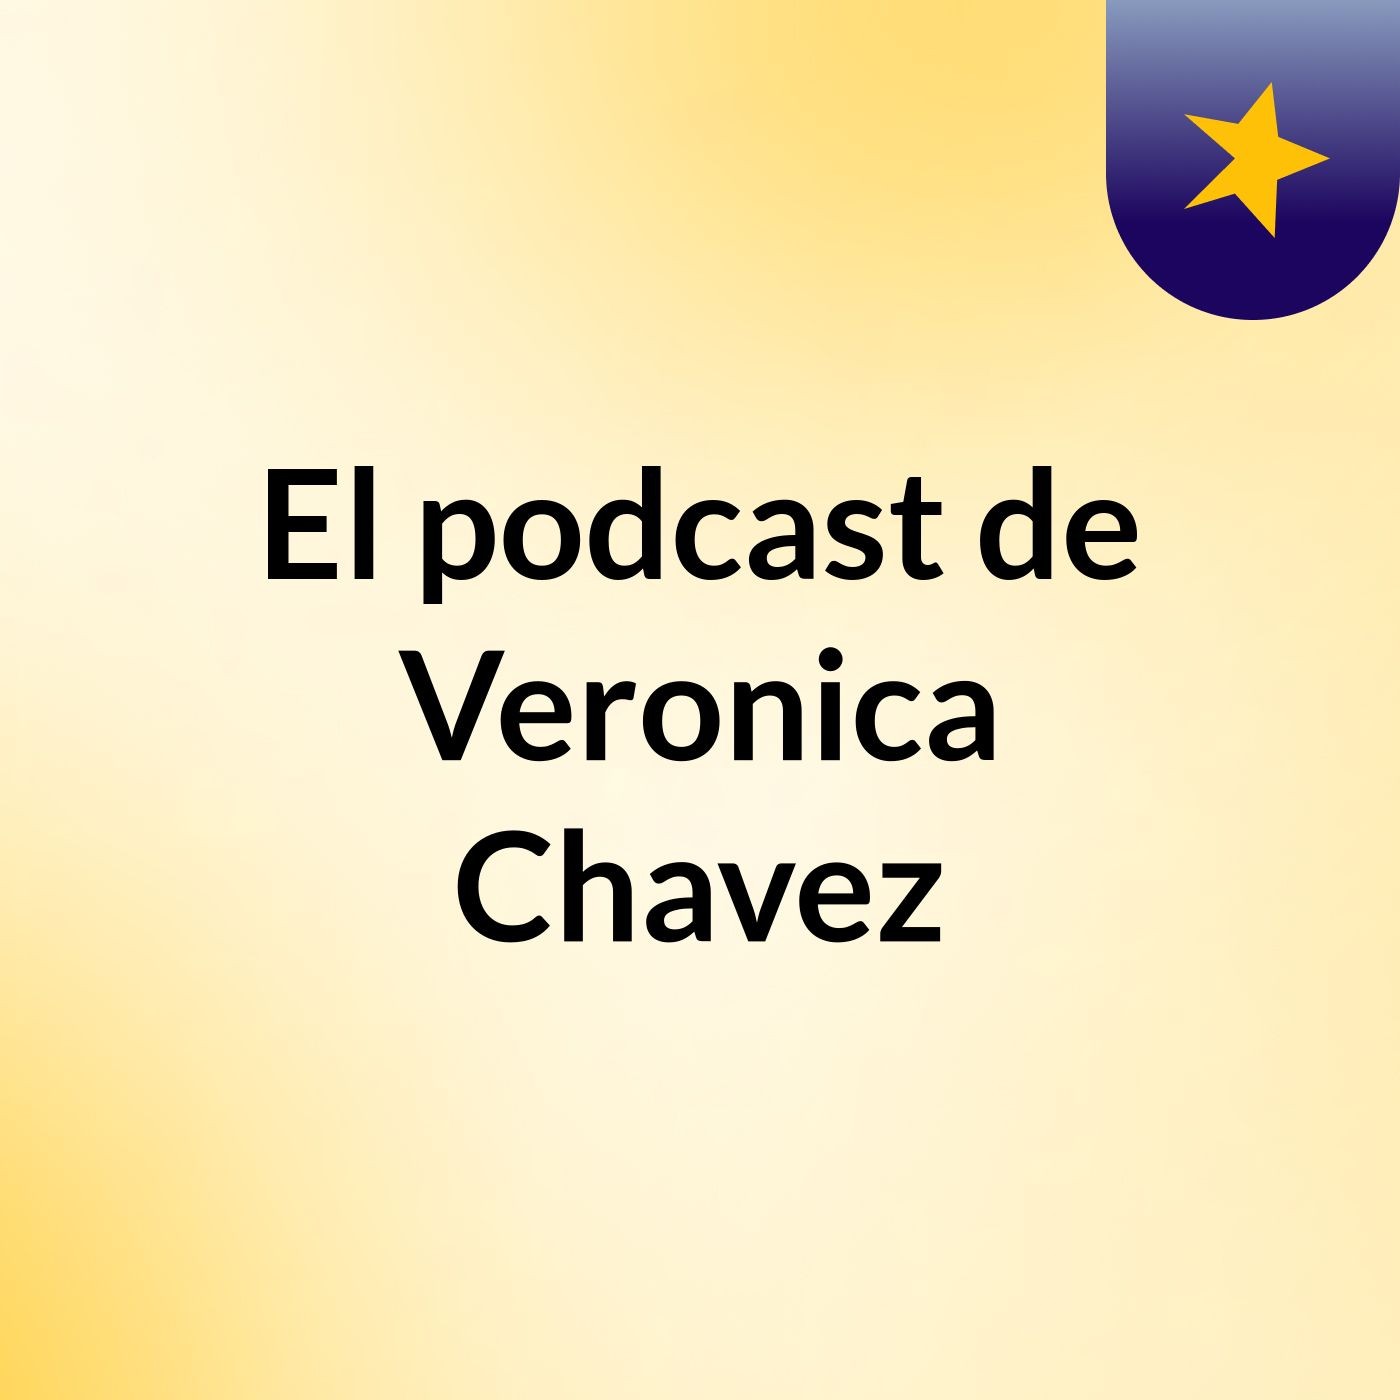 El podcast de Veronica Chavez